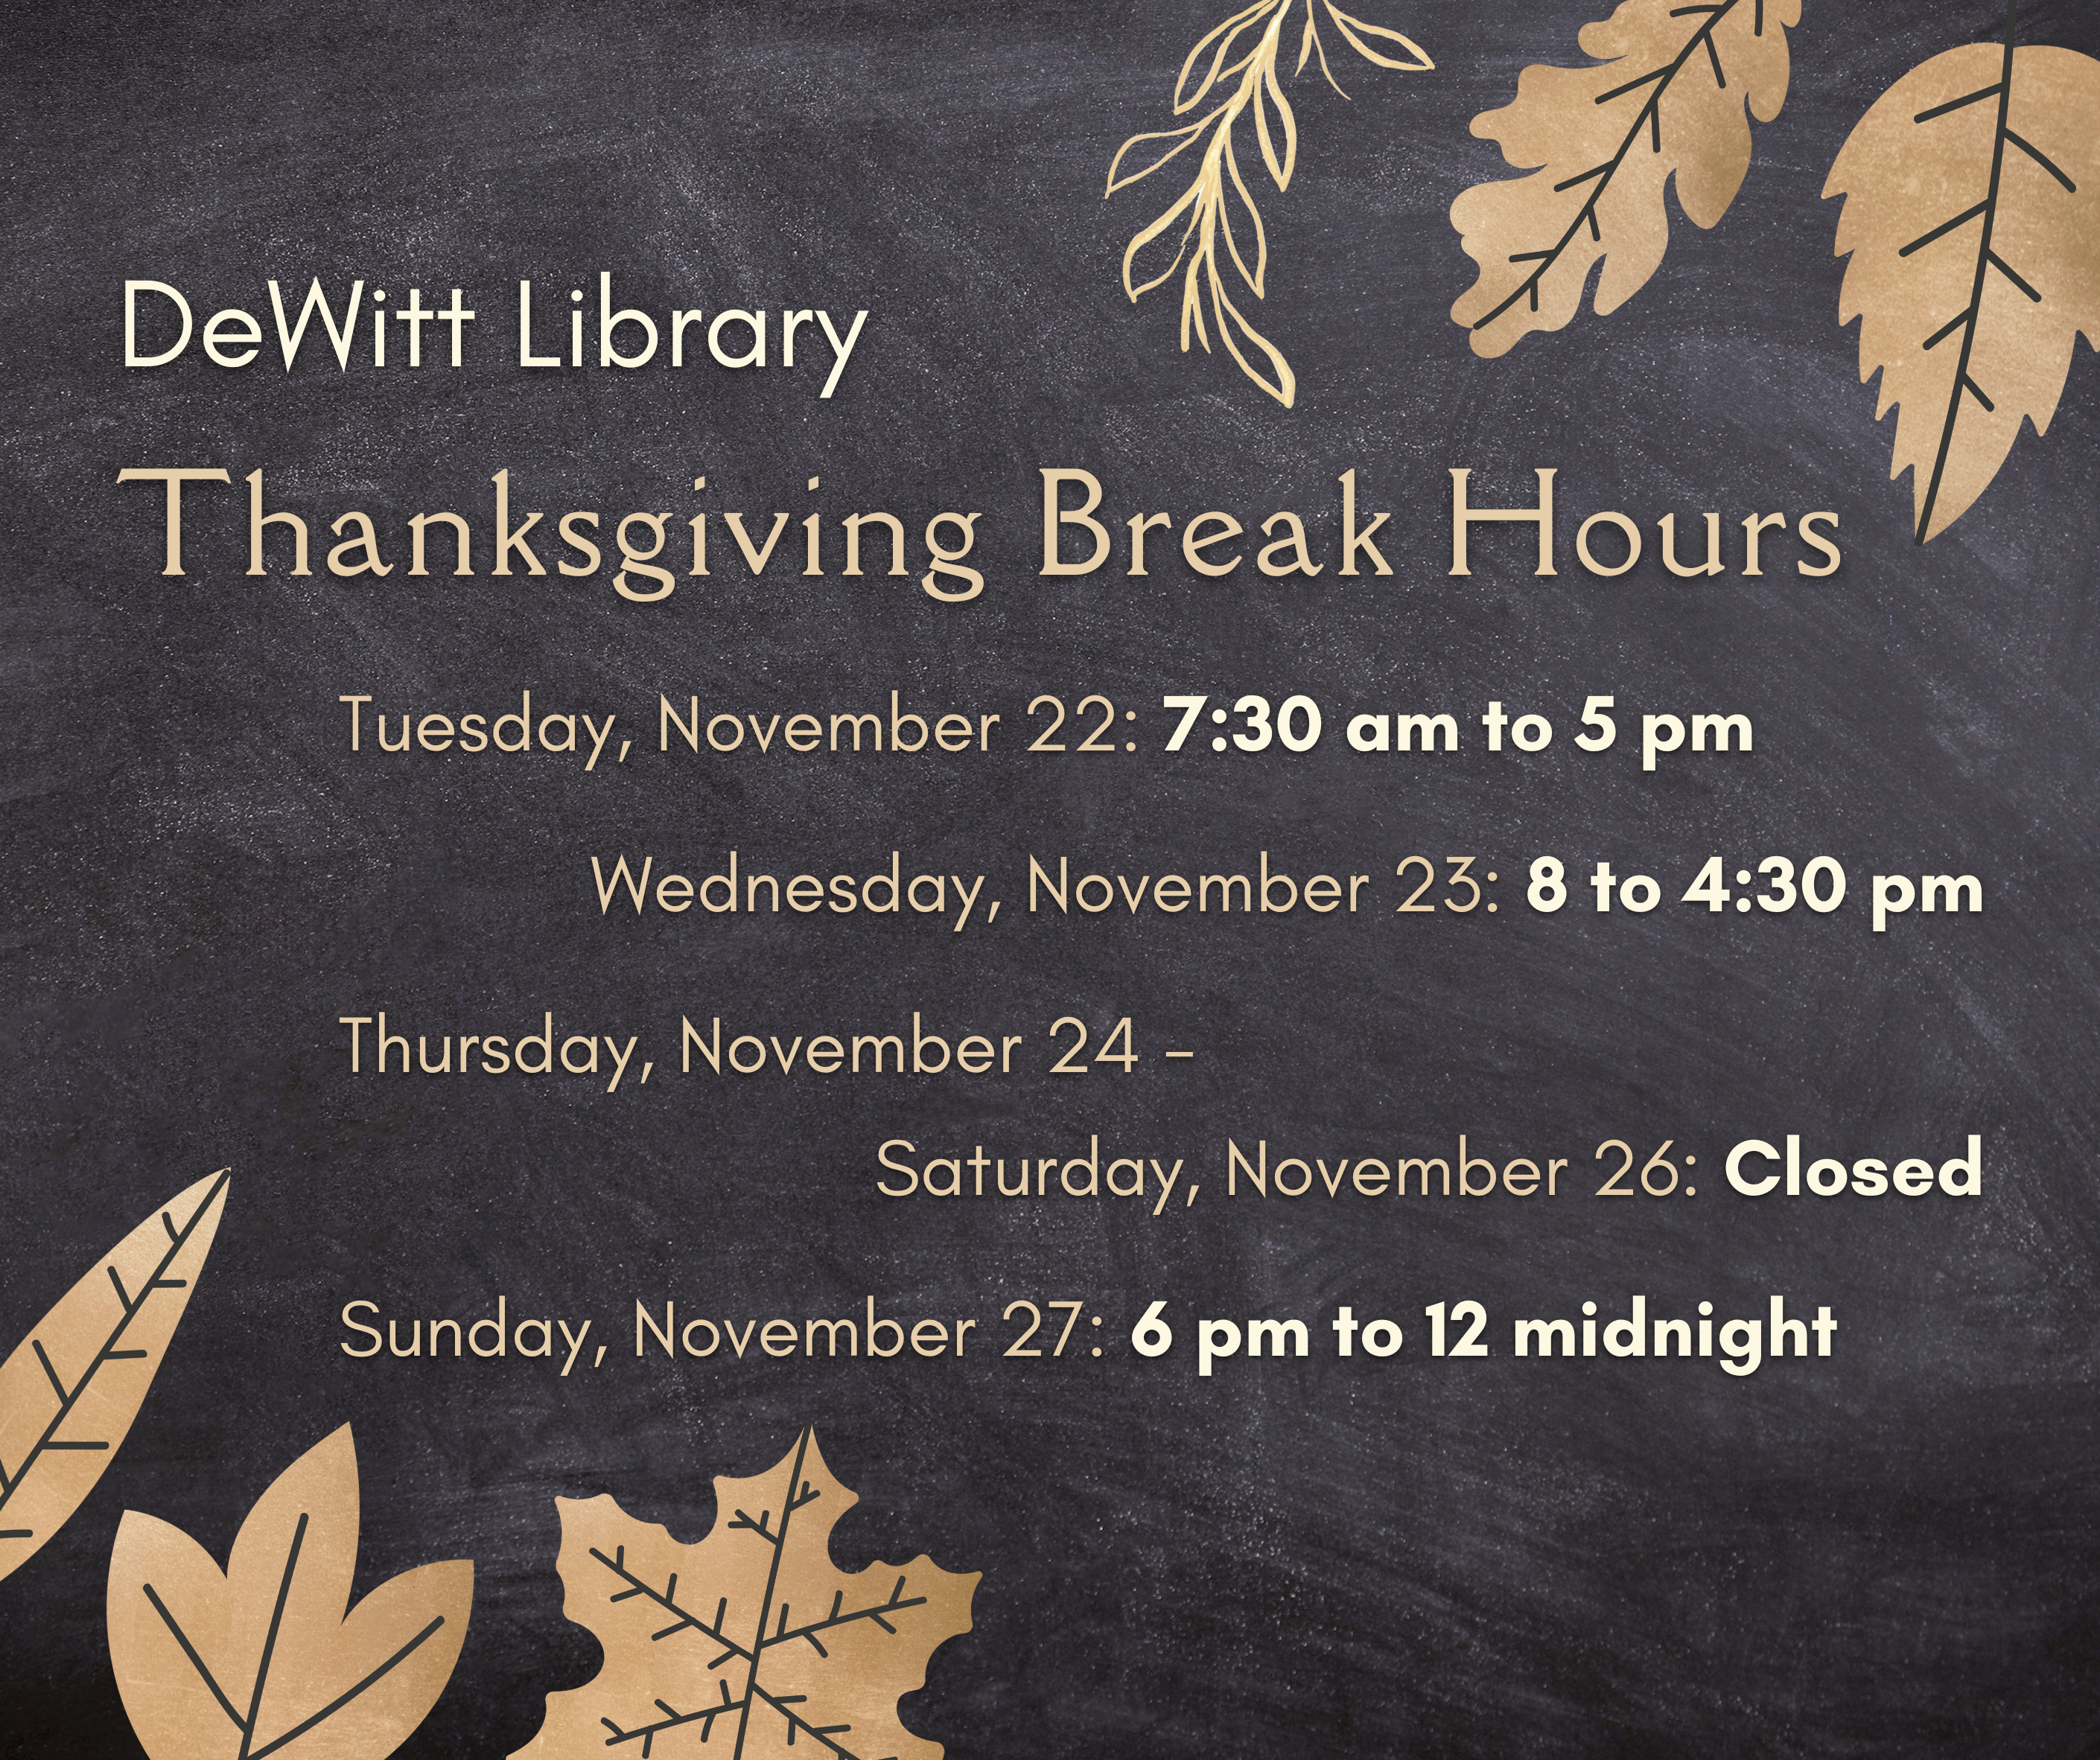 Thanksgiving Break Hours: Tuesday, November 22: 7:30 am to 5 pm;  Wednesday, November 23: 8 to 4:30 pm;  Thursday, November 24 - Saturday, November 26: Closed;  Sunday, November 27: 6 pm to 12 midnight.